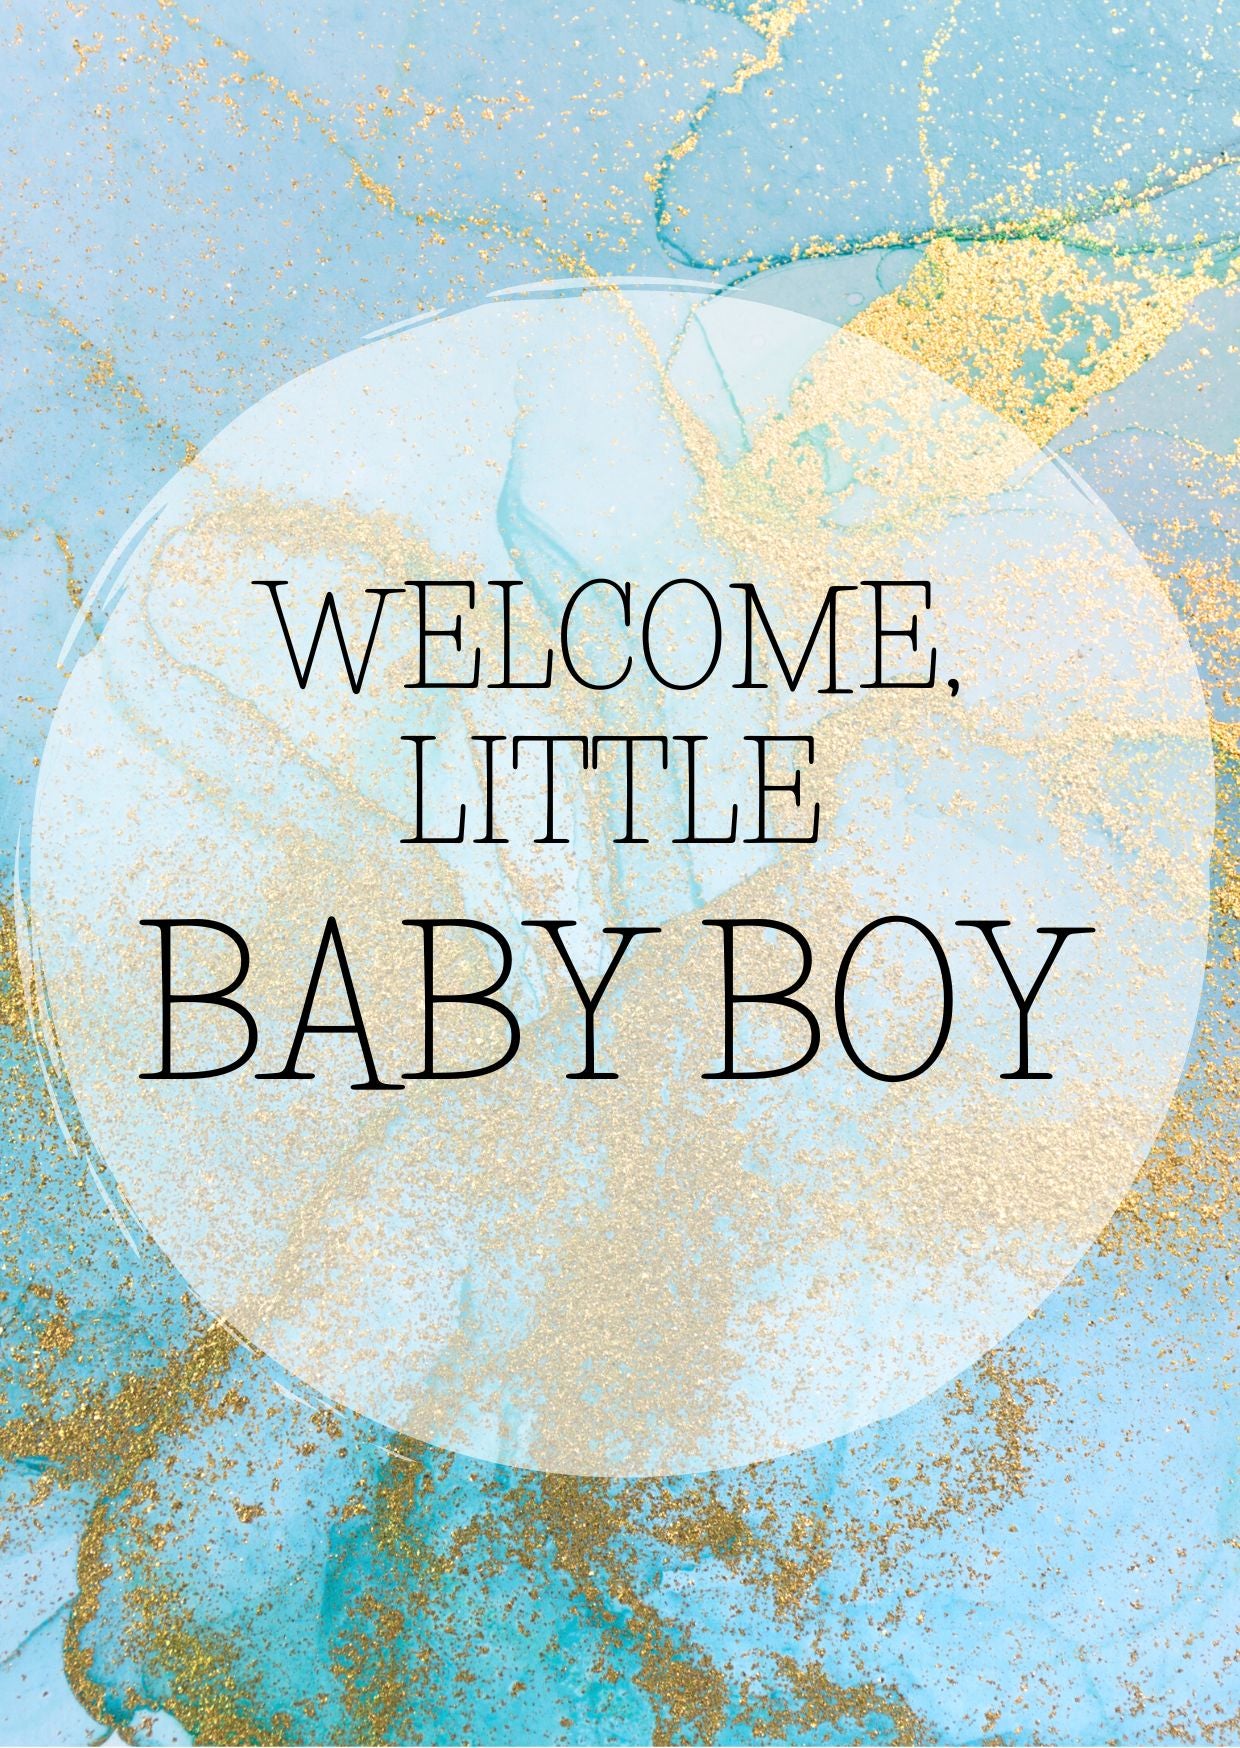 Welcome little baby boy | Kaart Fripperies